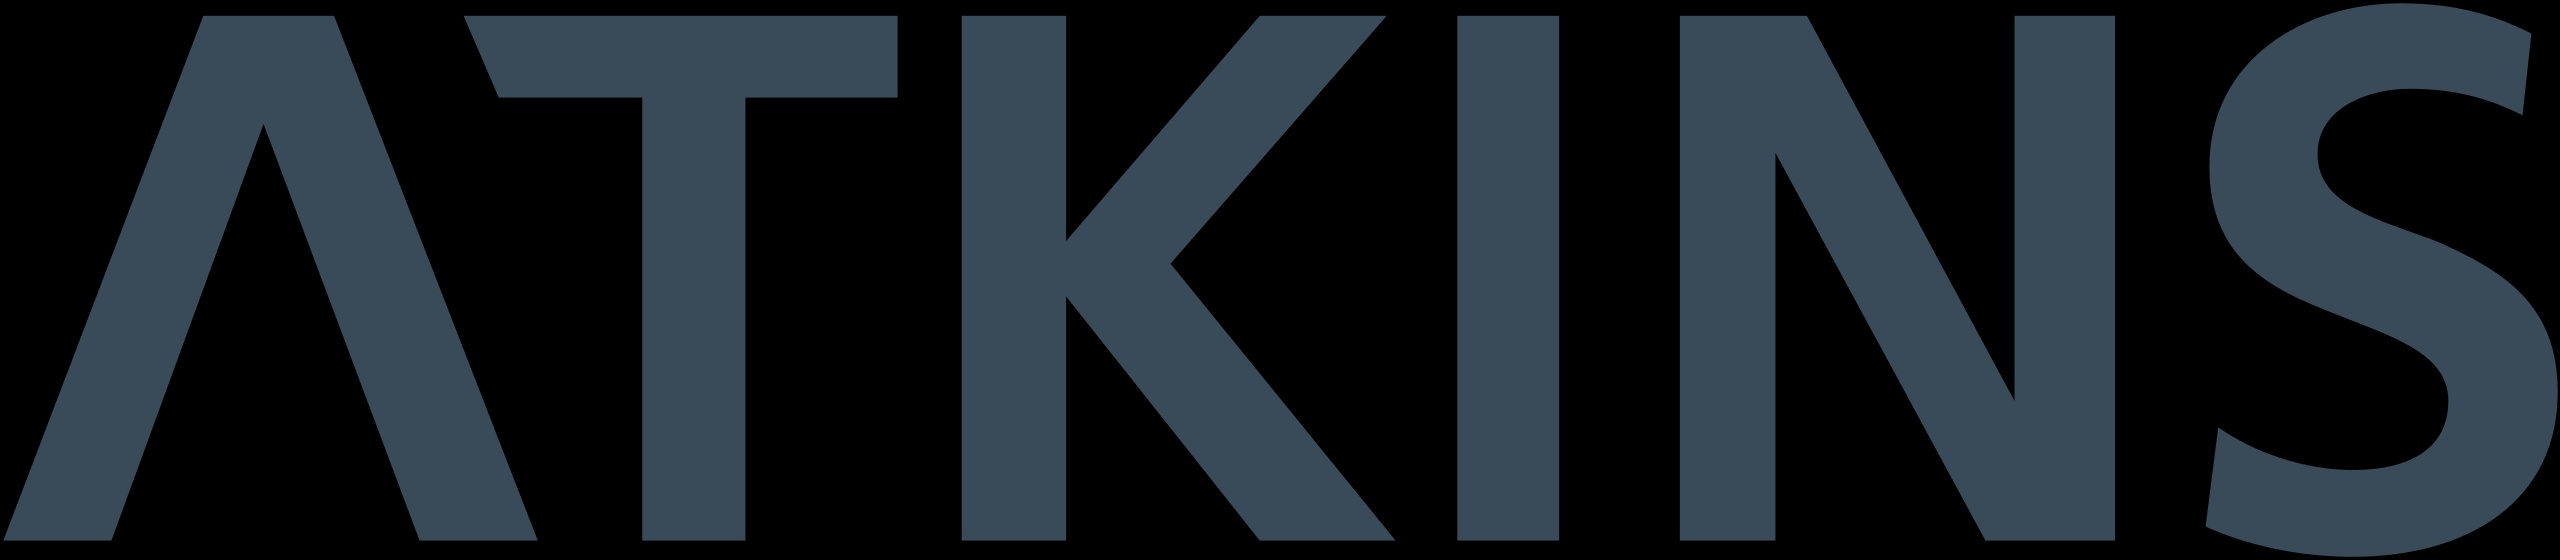 ATKINS logo | IE